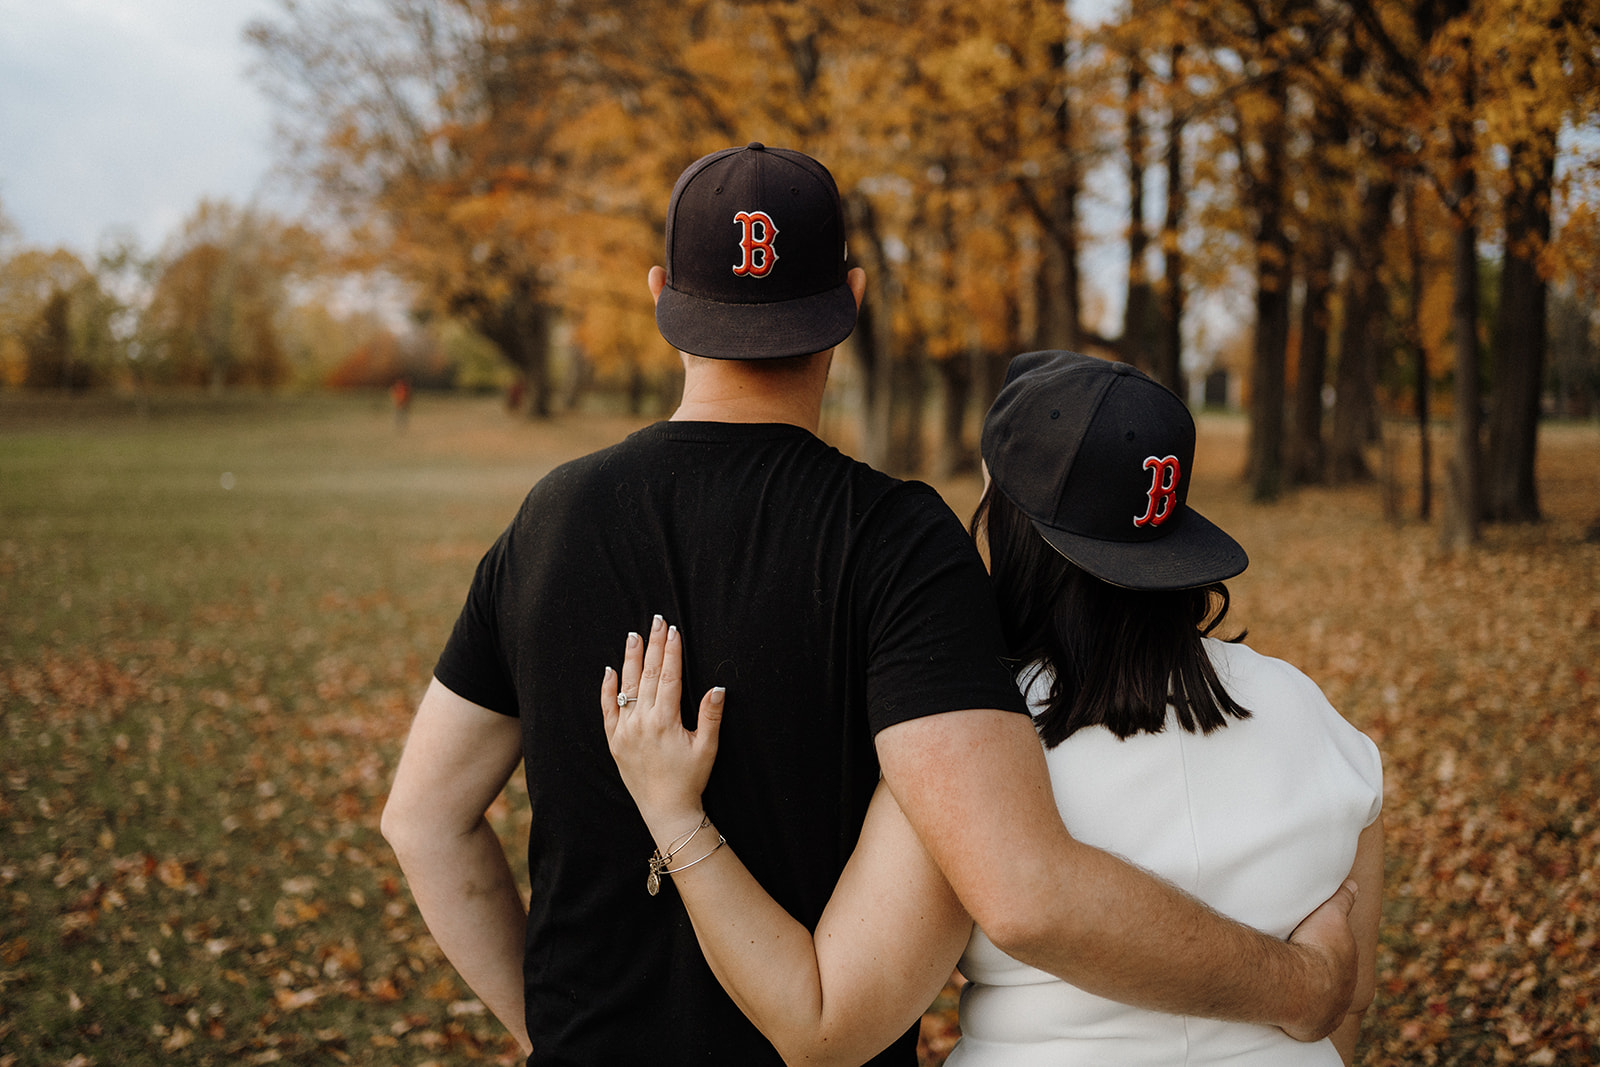 A m an and woman wearing Boston hats outside.